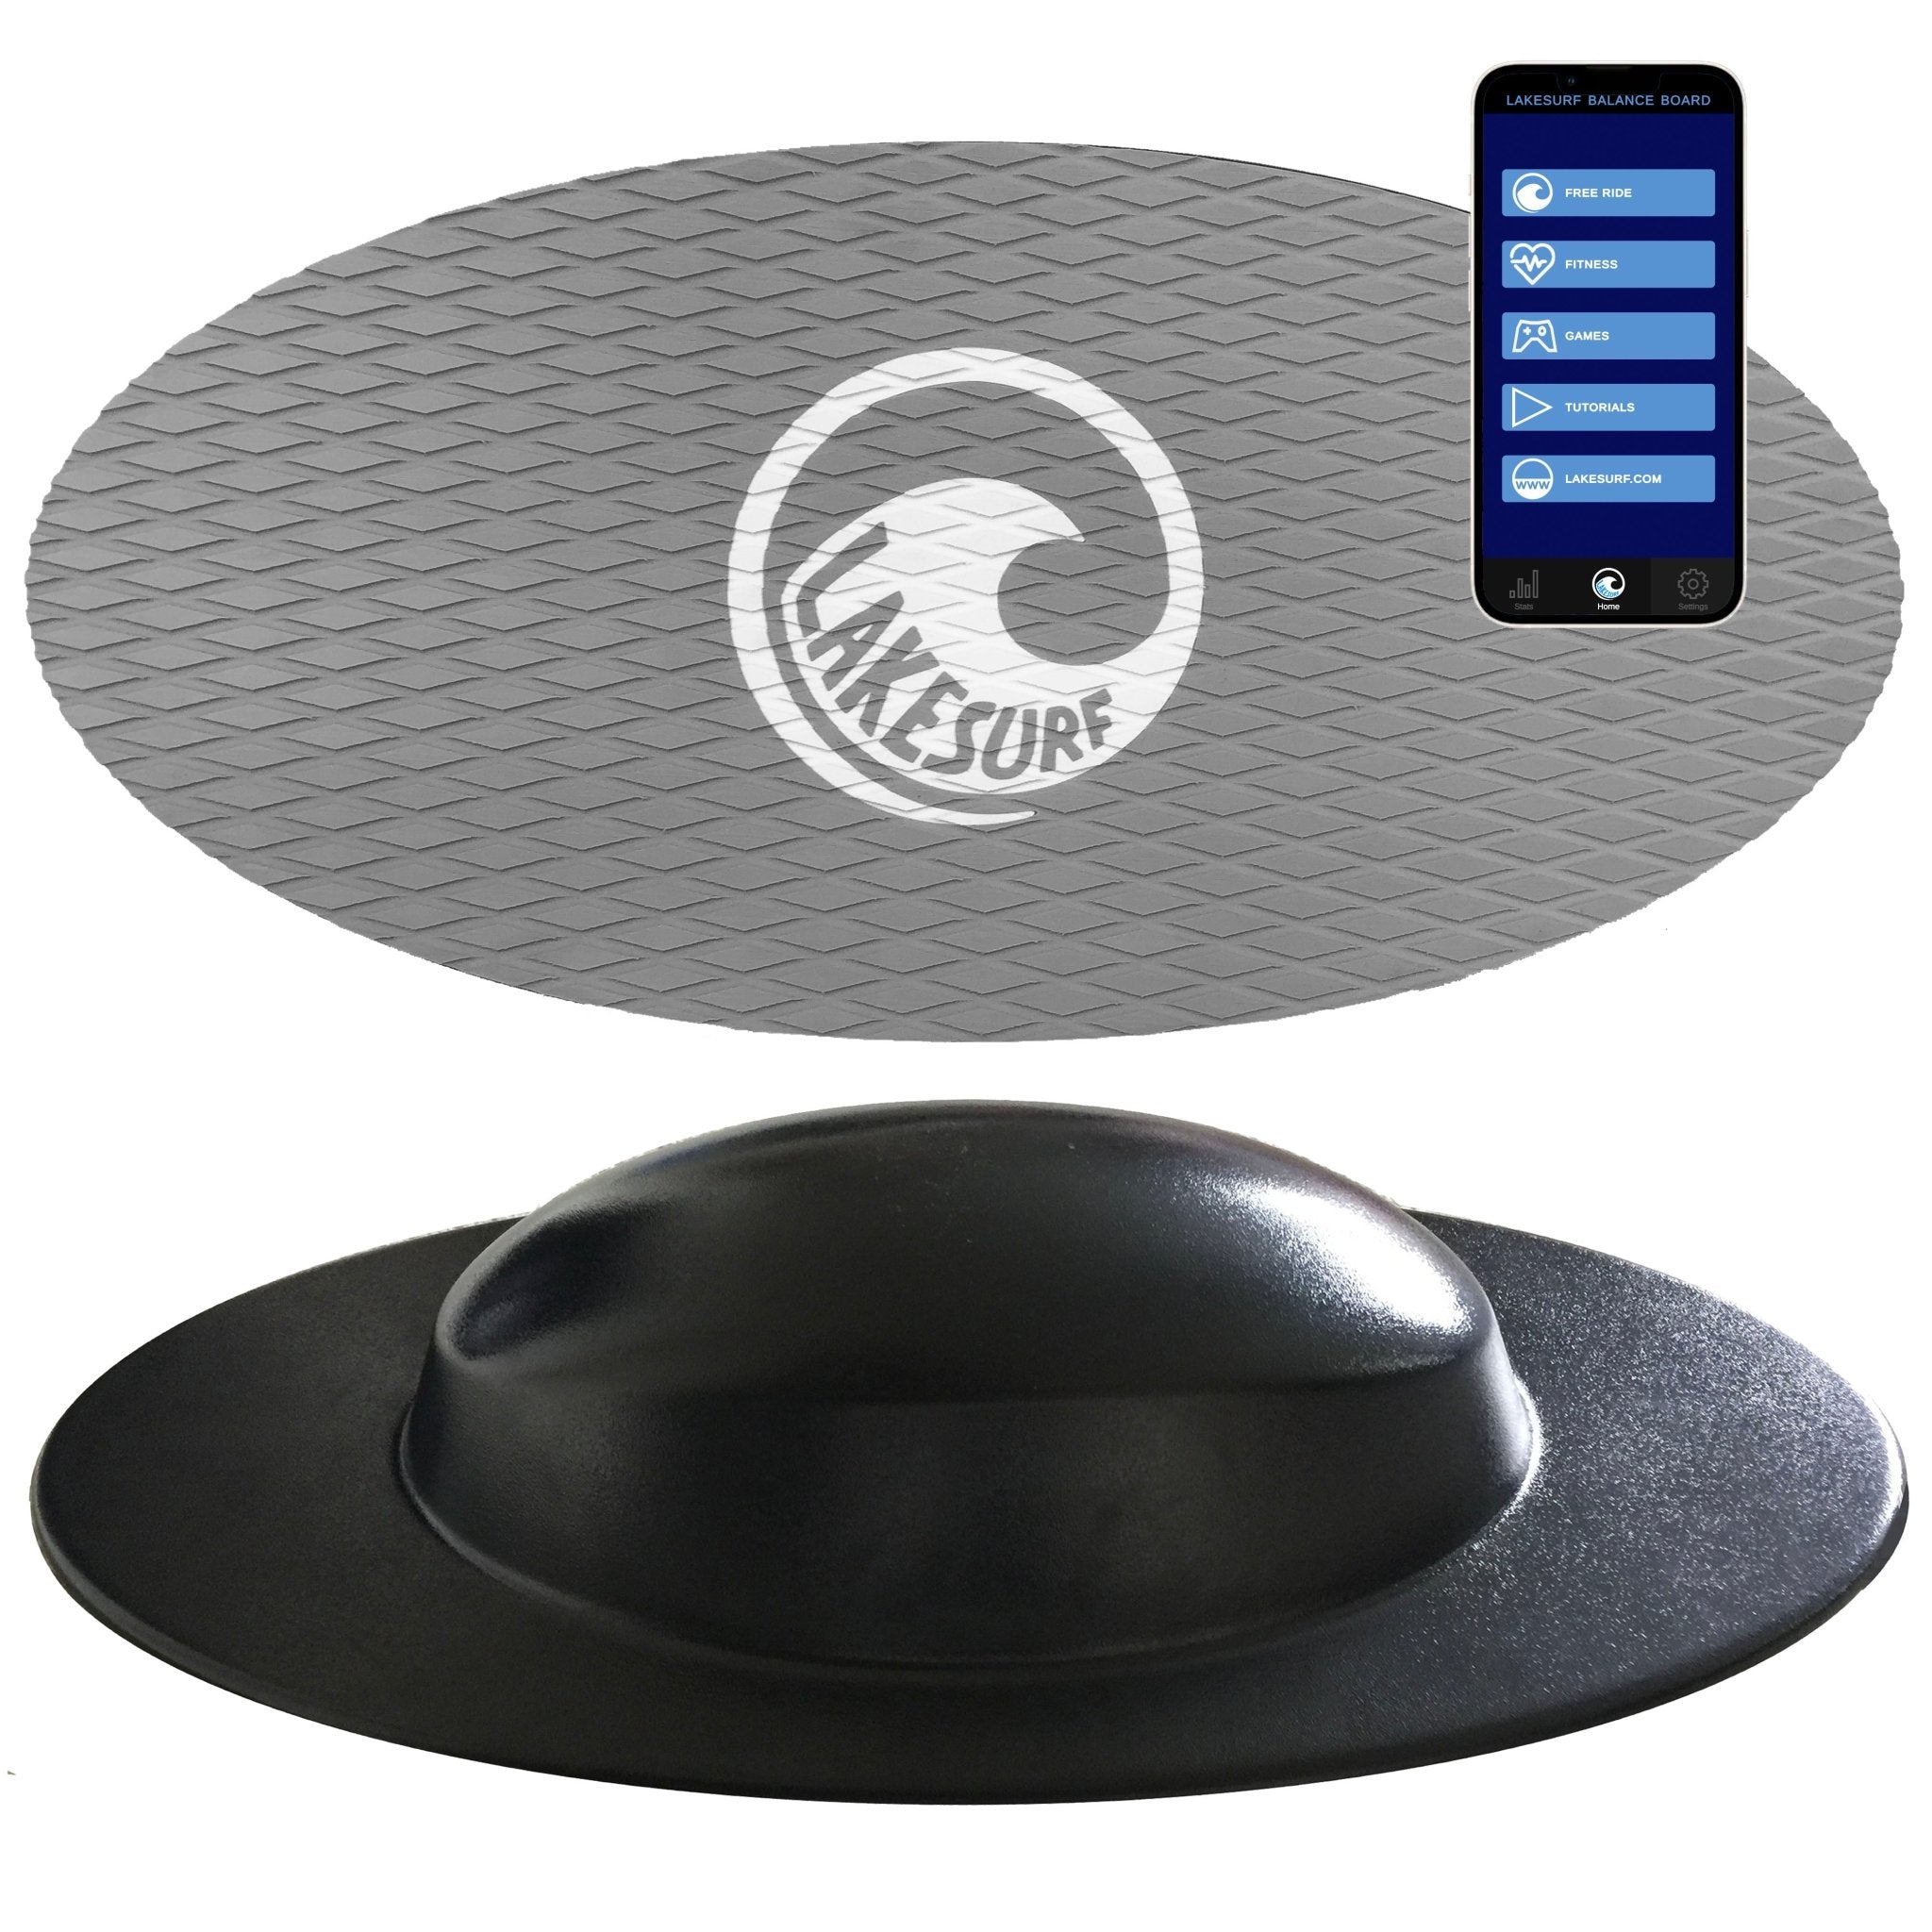 Wakesurf Balance Board - Steel Gray